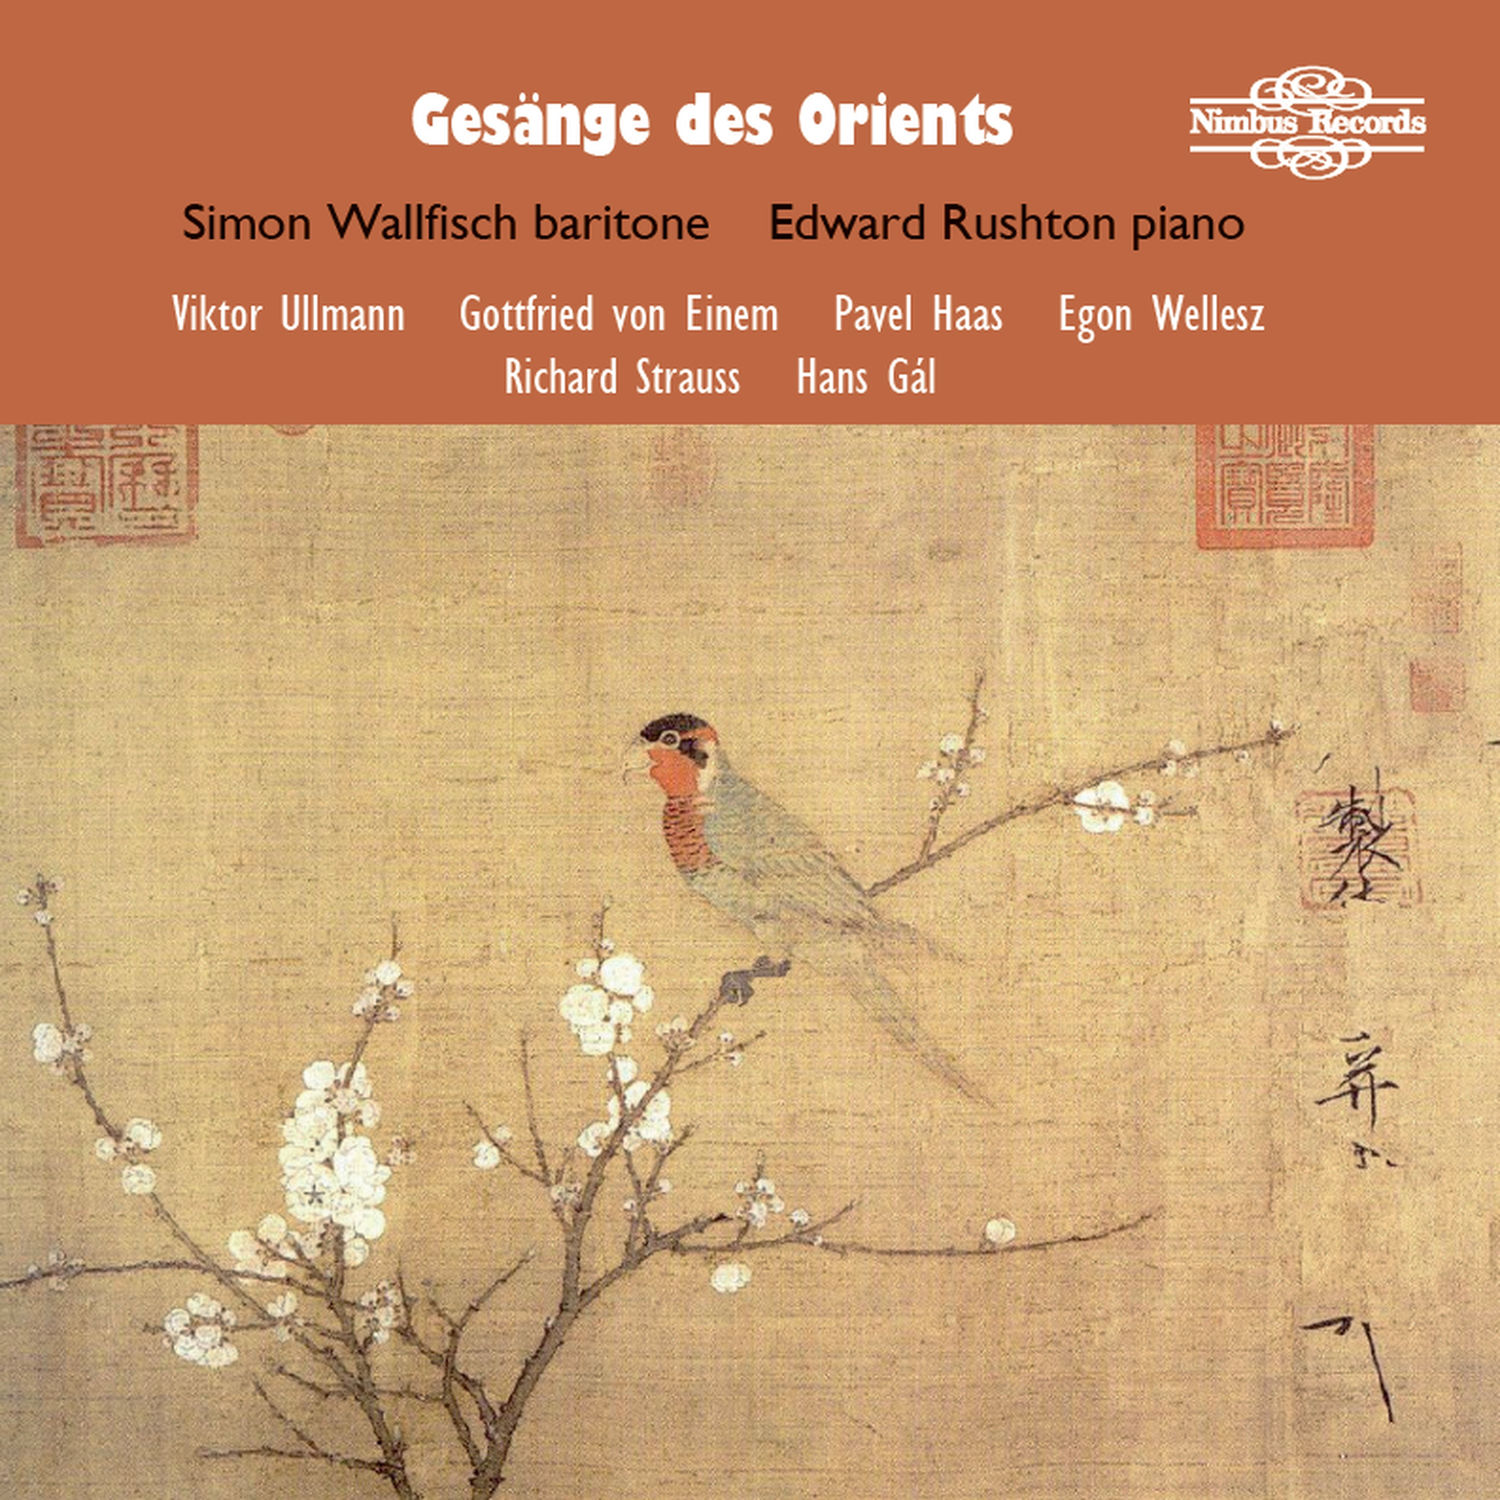 Gesänge Des Orients: Songs of the Orient